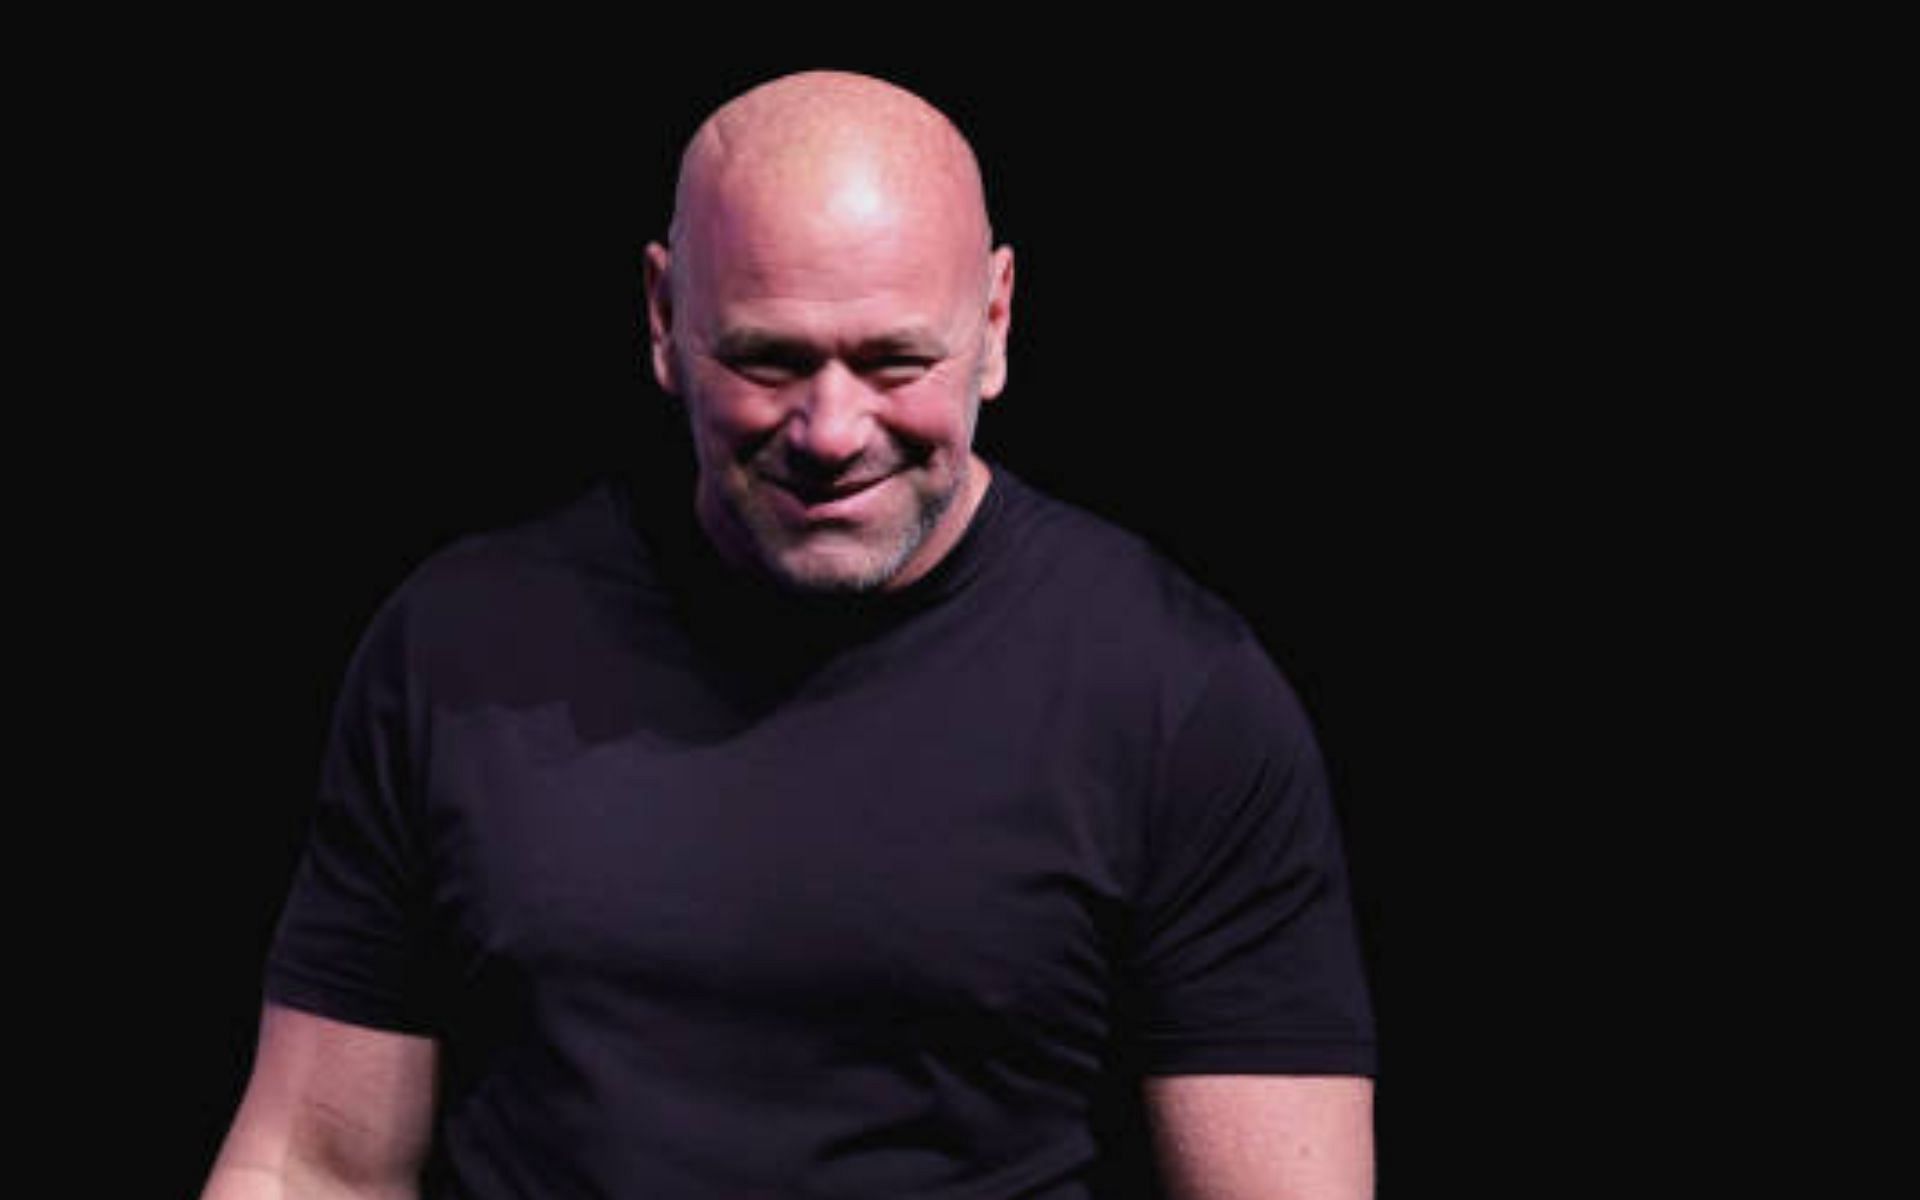 UFC President and Power Slap executive Dana White